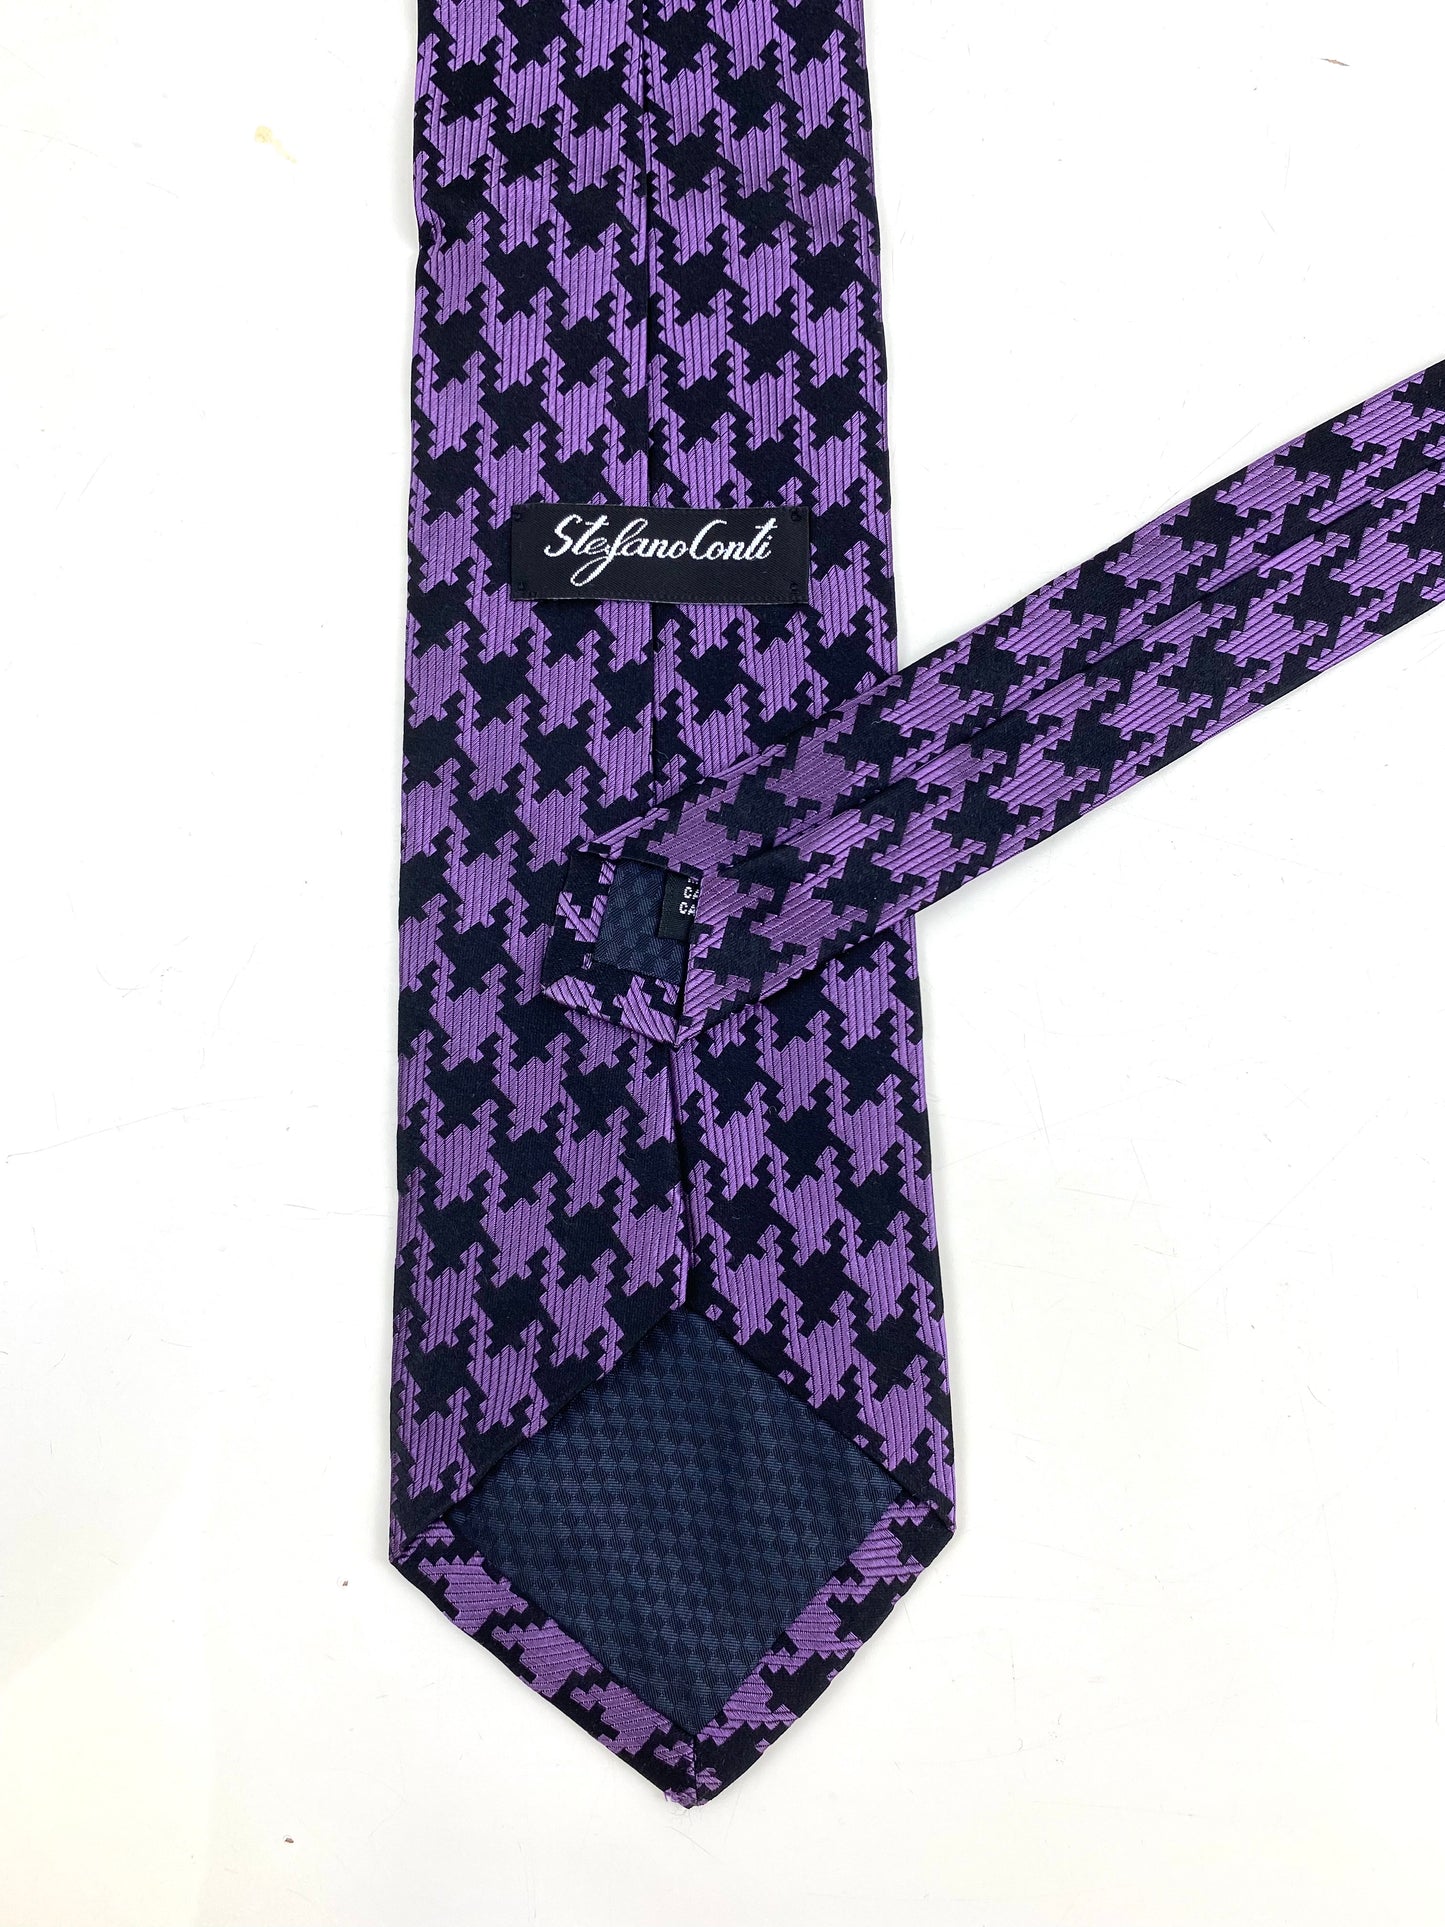 90s Deadstock Silk Necktie, Men's Vintage Purple/ Black Houndstooth Pattern Tie, NOS